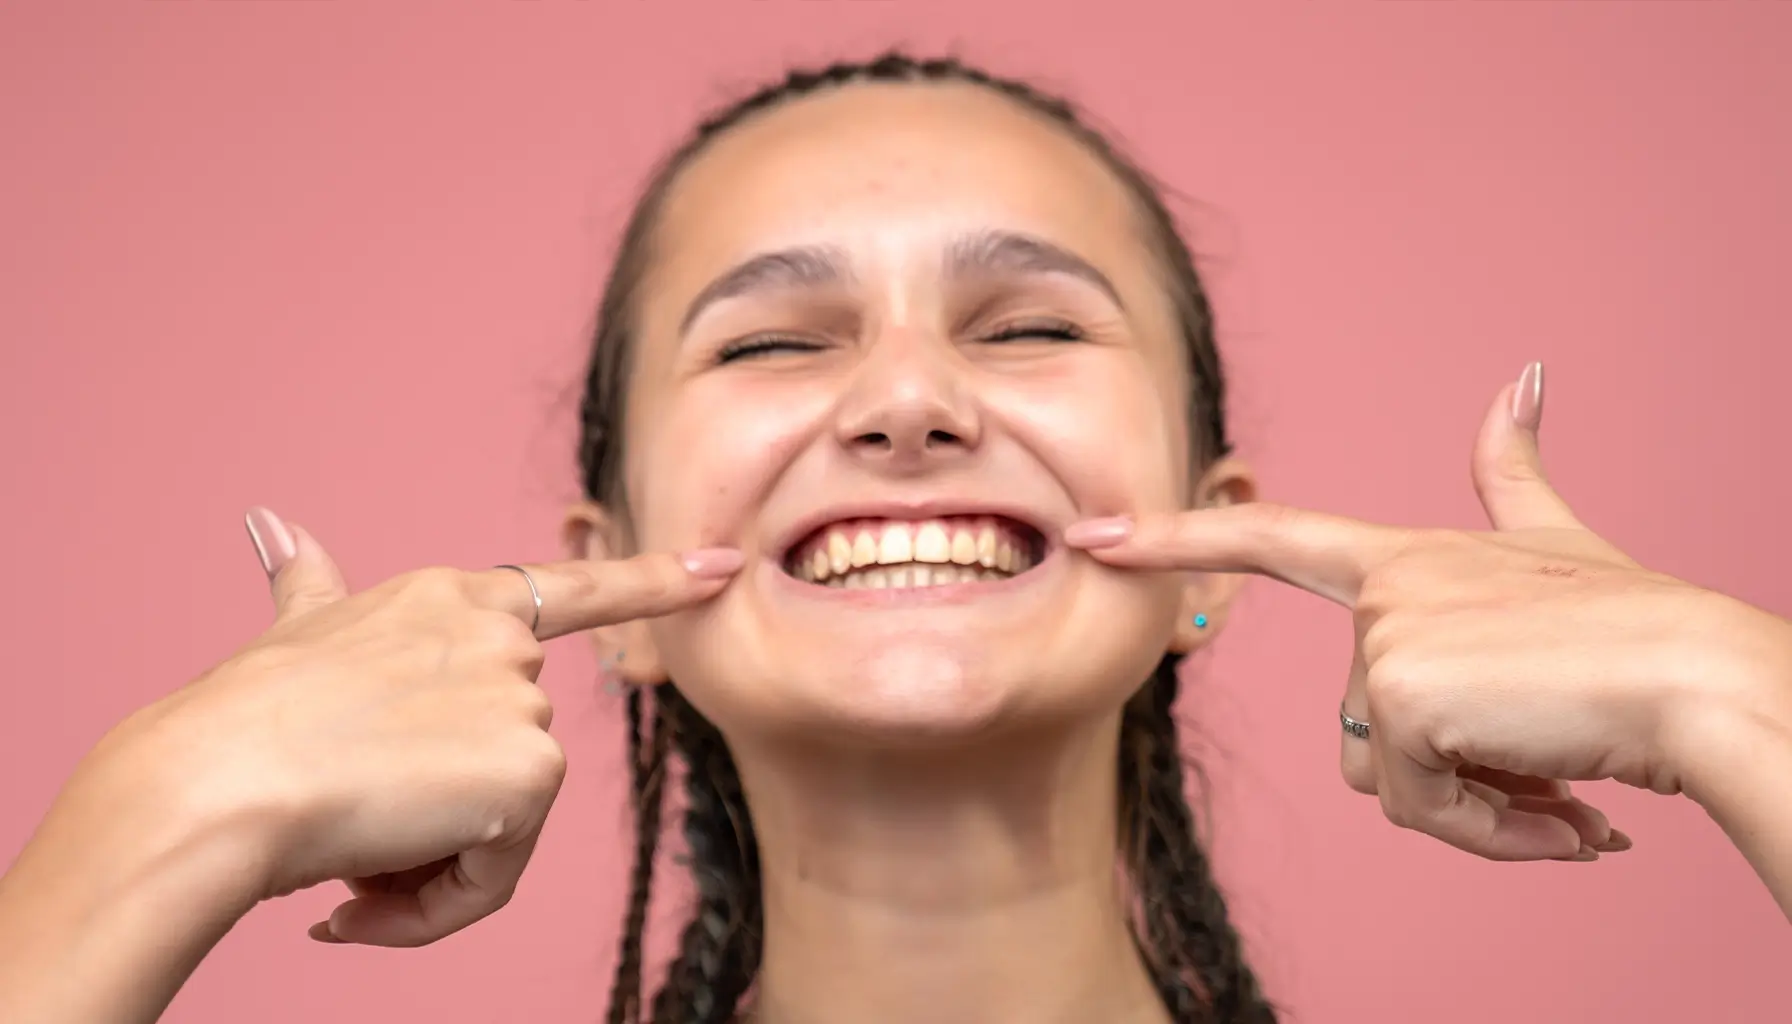 Collage dentaire, vue rapprochée jeune fille souriante rose